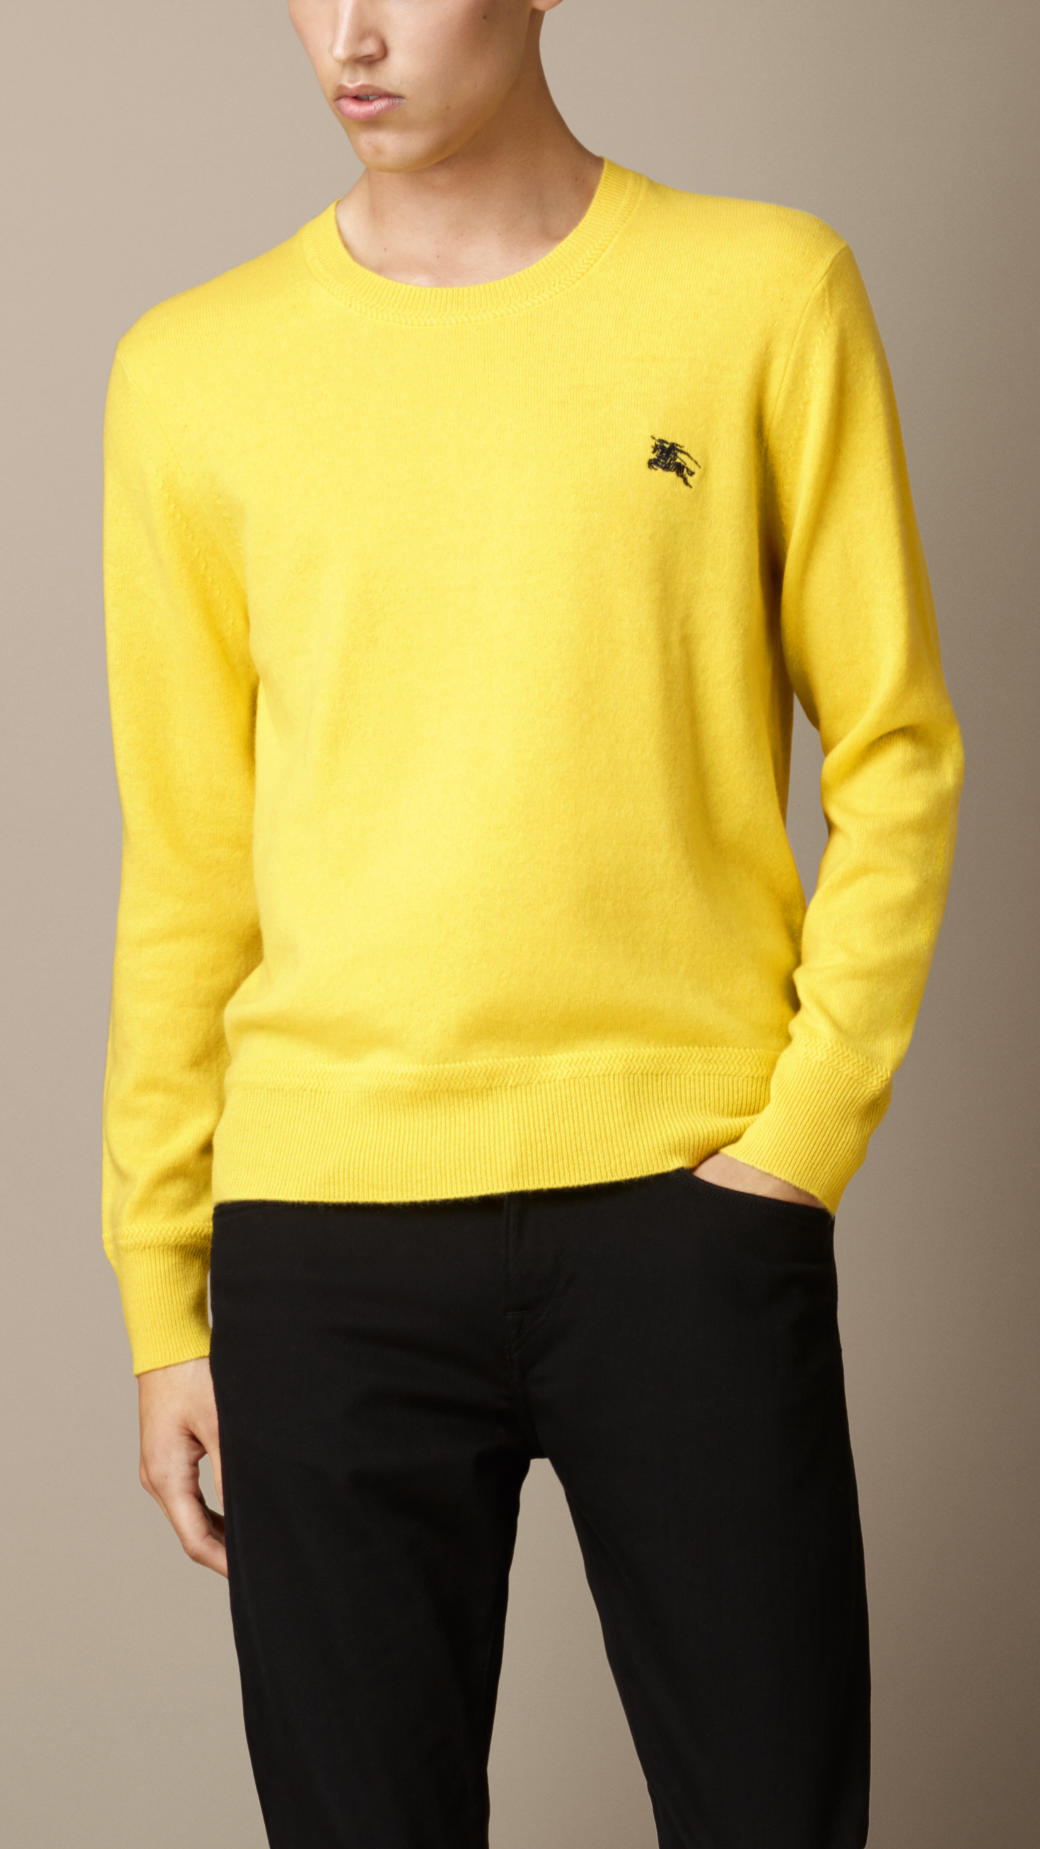 burberry sweater mens yellow